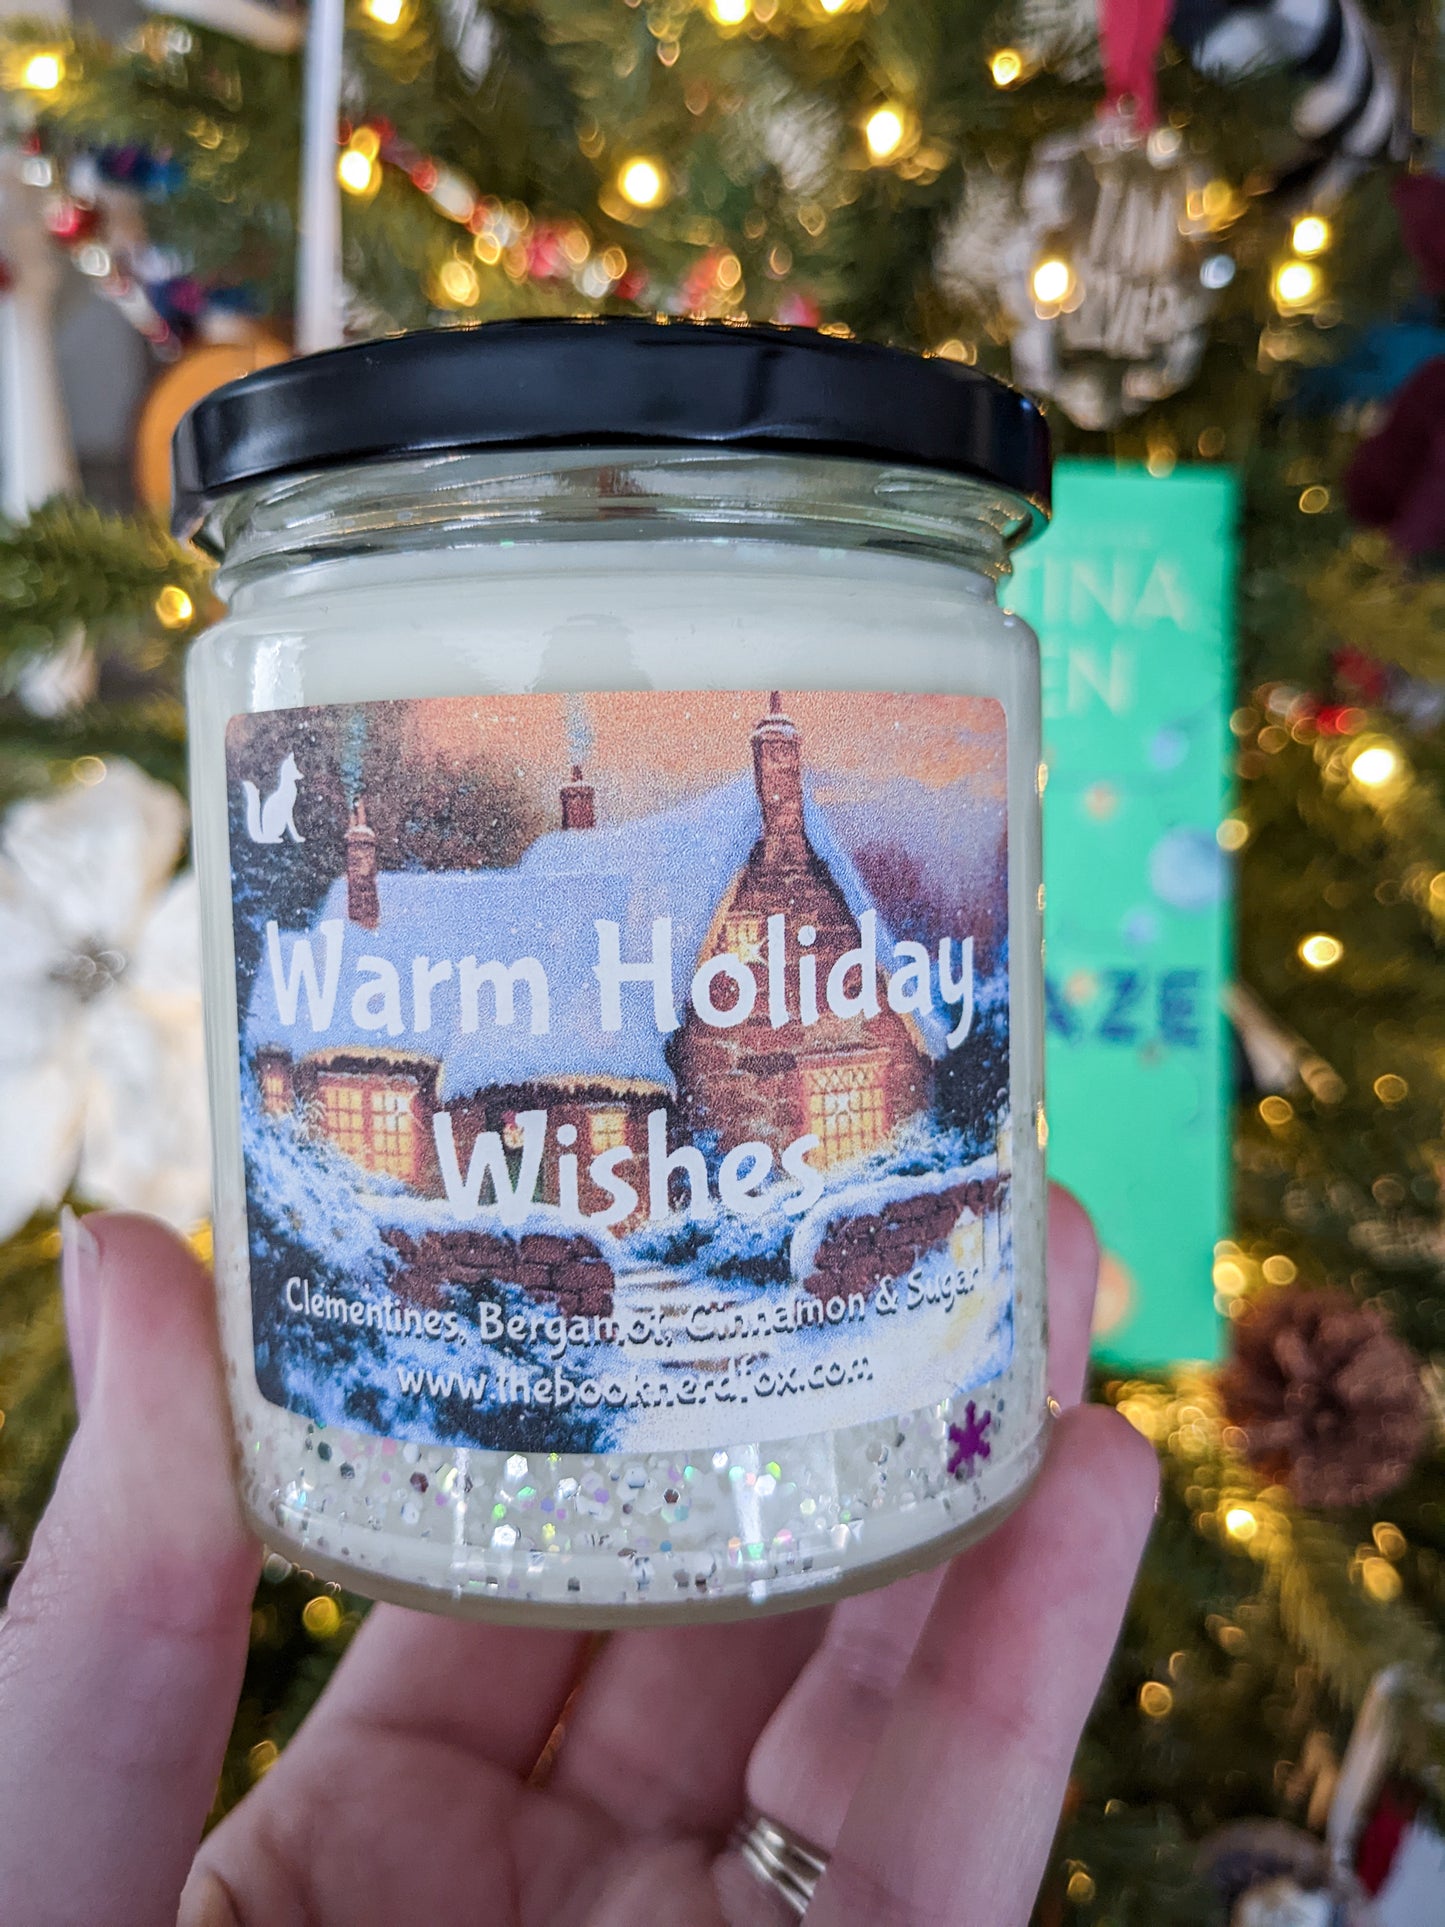 Warm Holiday Wishes - Clementines, Bergamot, Cinnamon, & Sugar